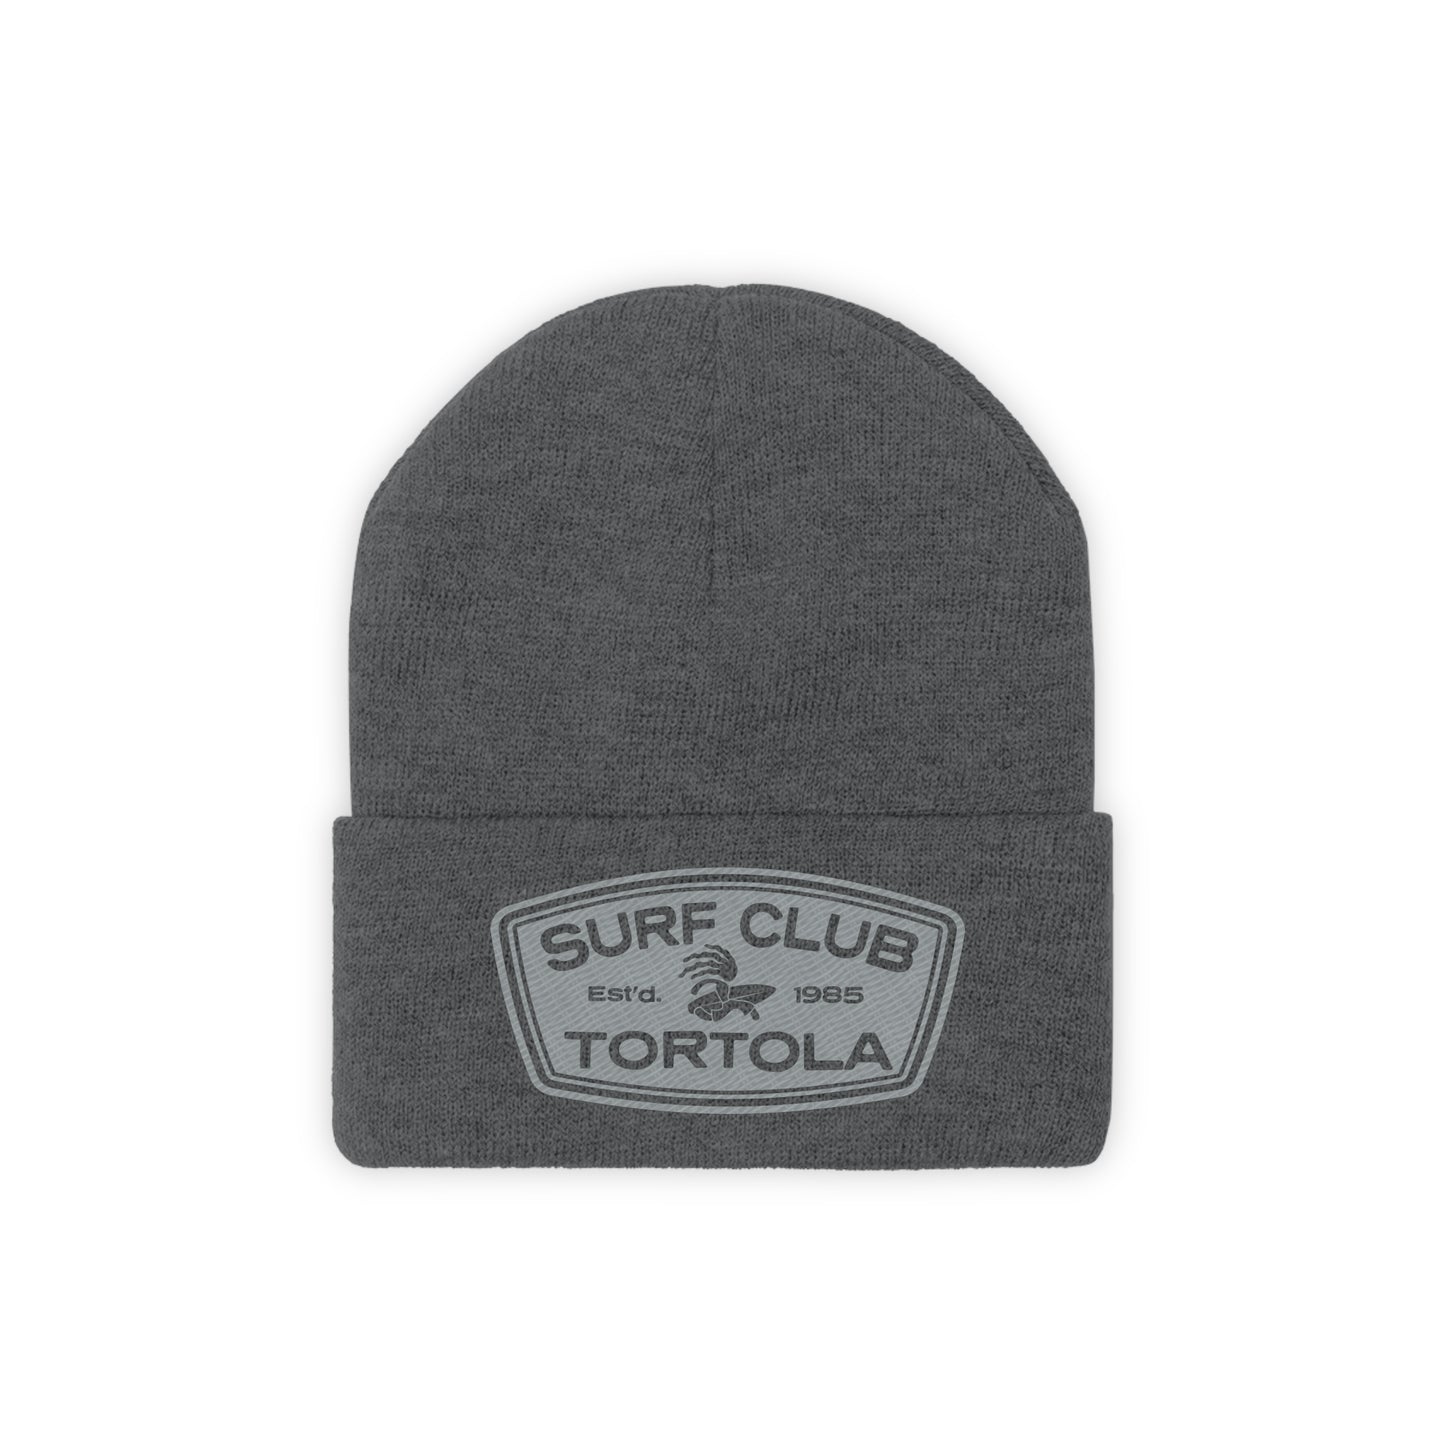 "Surf Club Tortola" Knit Beanie